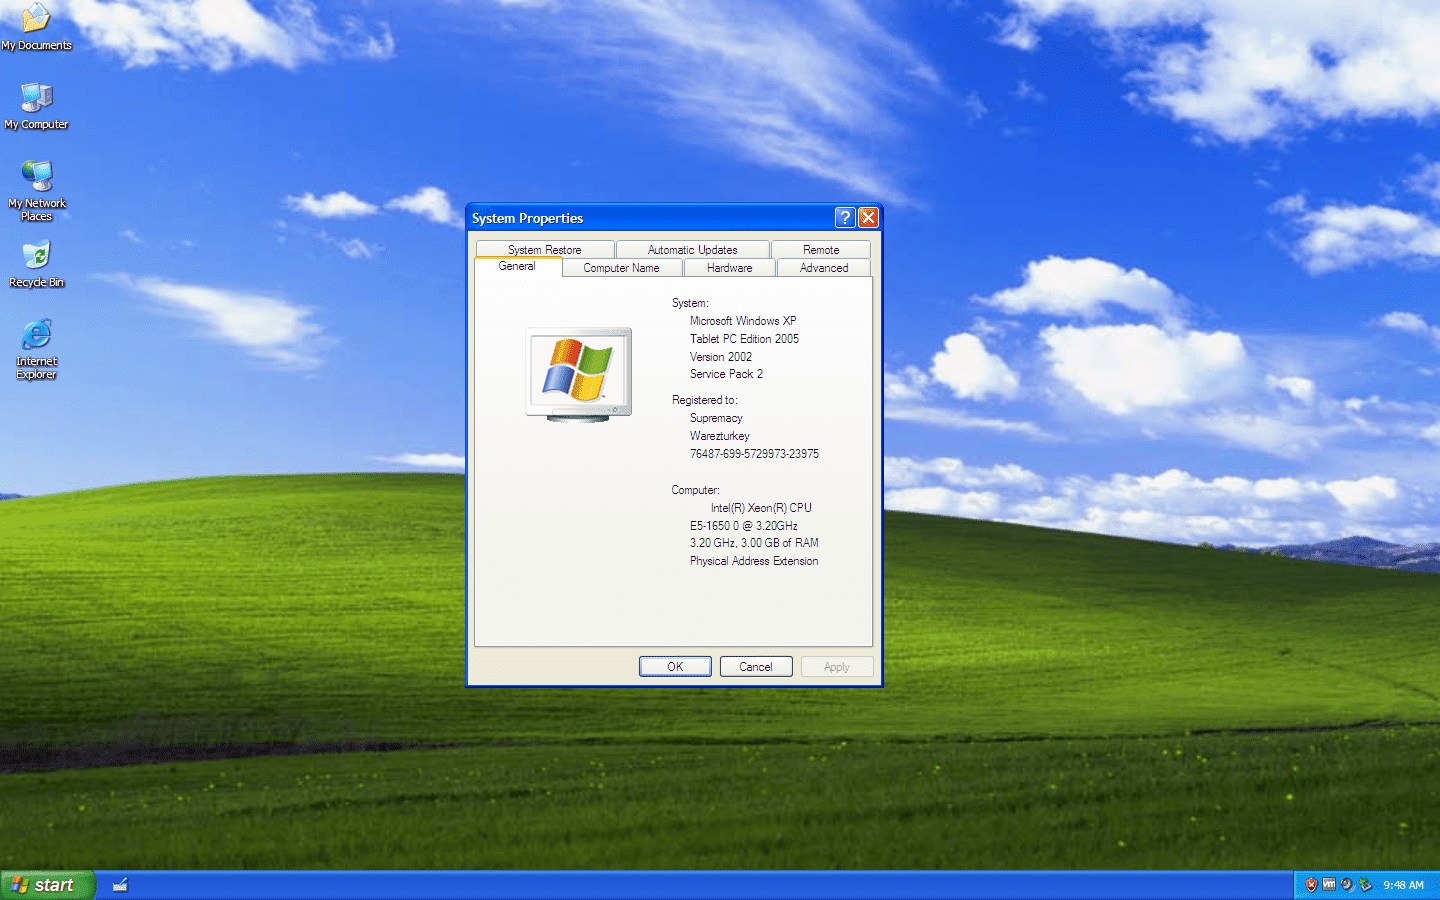 Windows xp tablet edition 2005